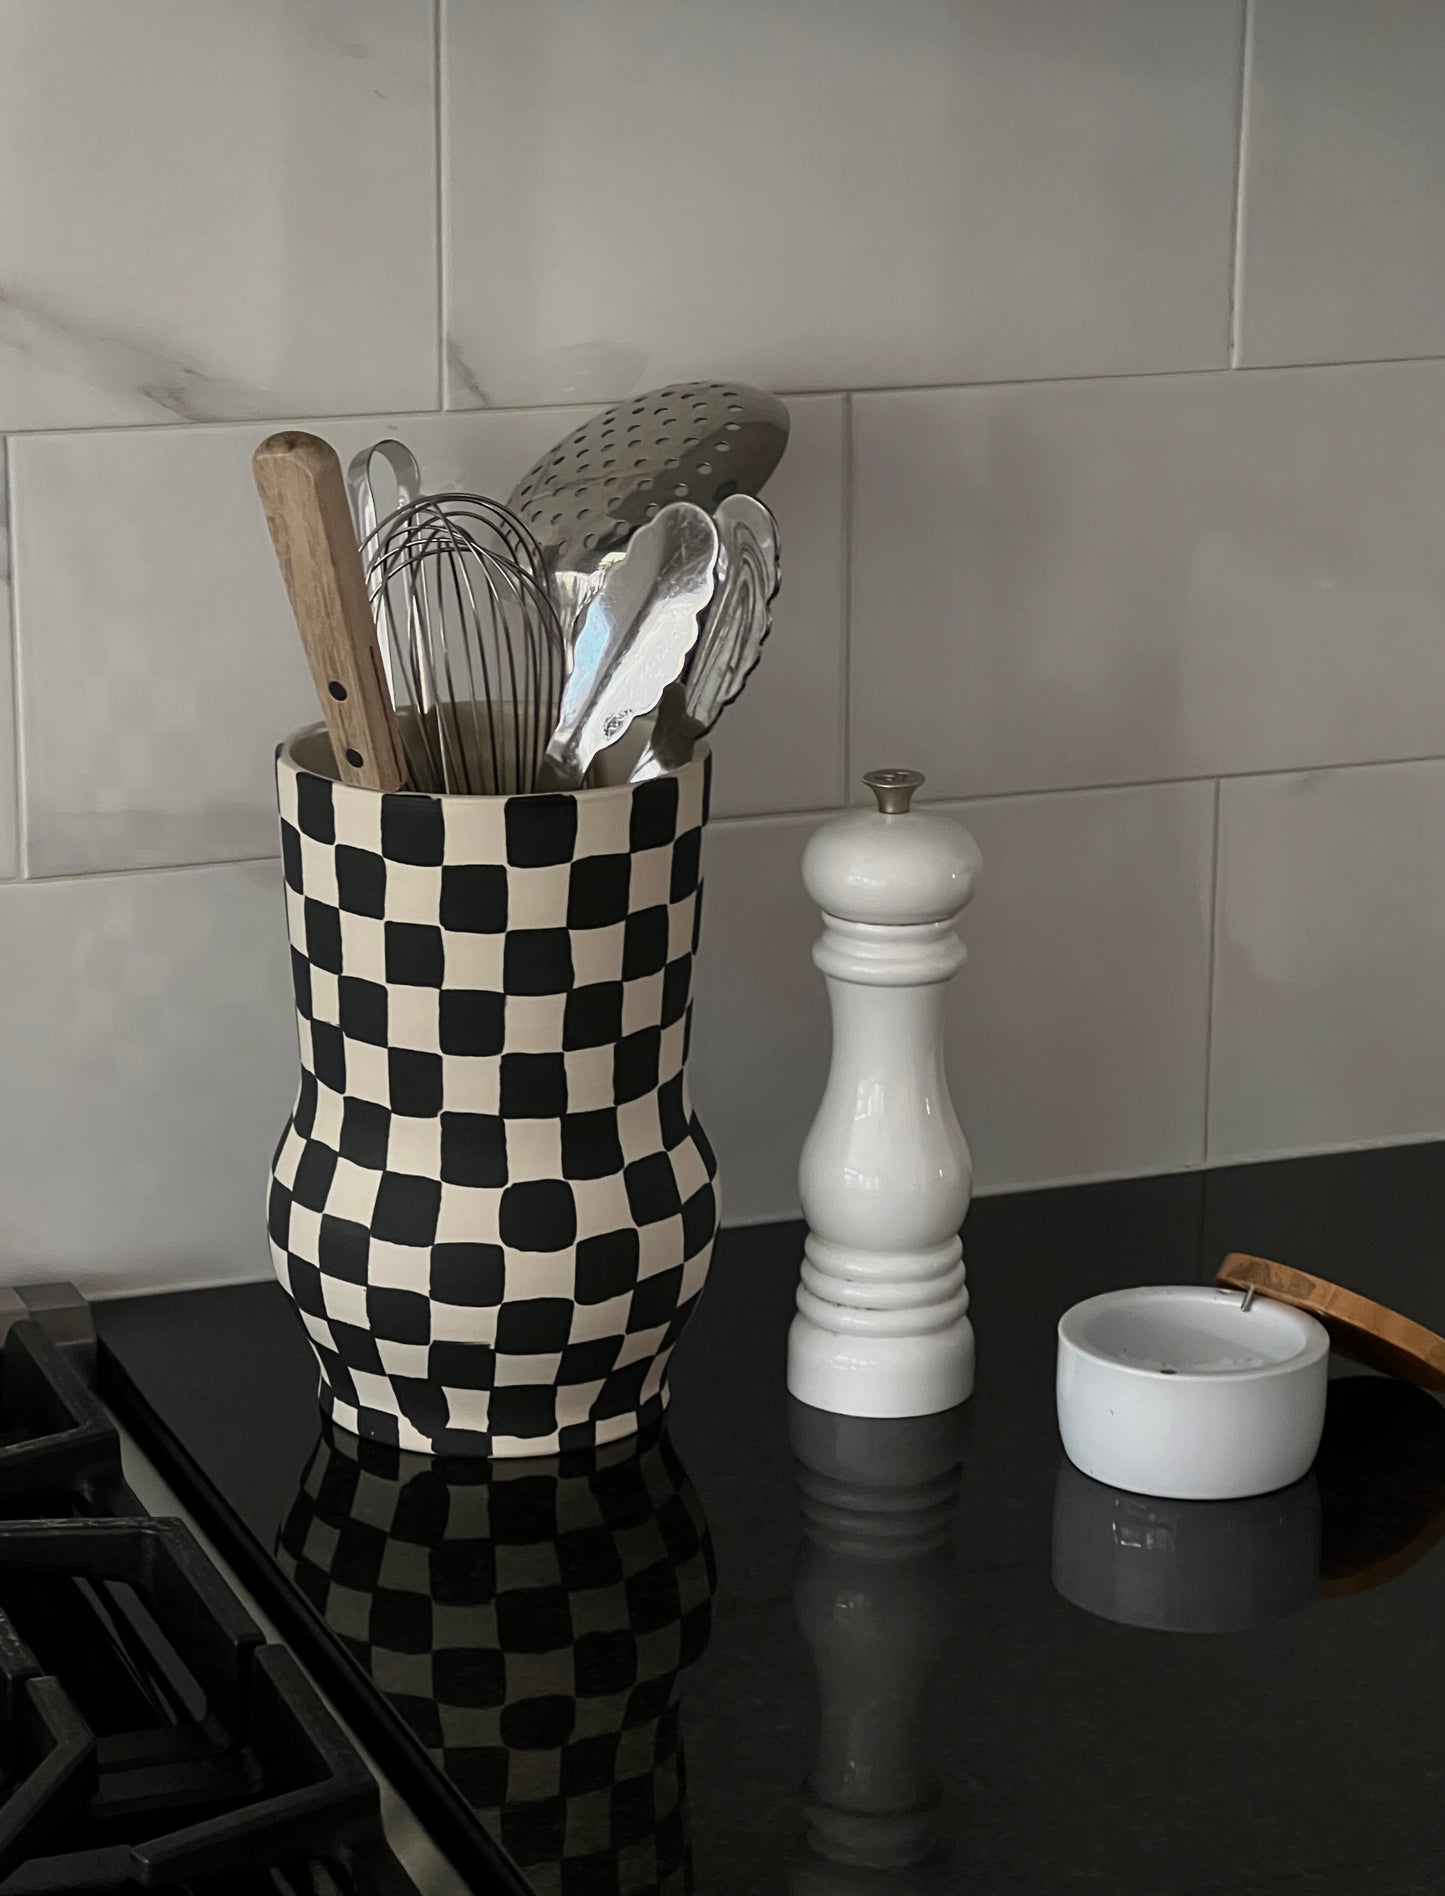 The checkered vase